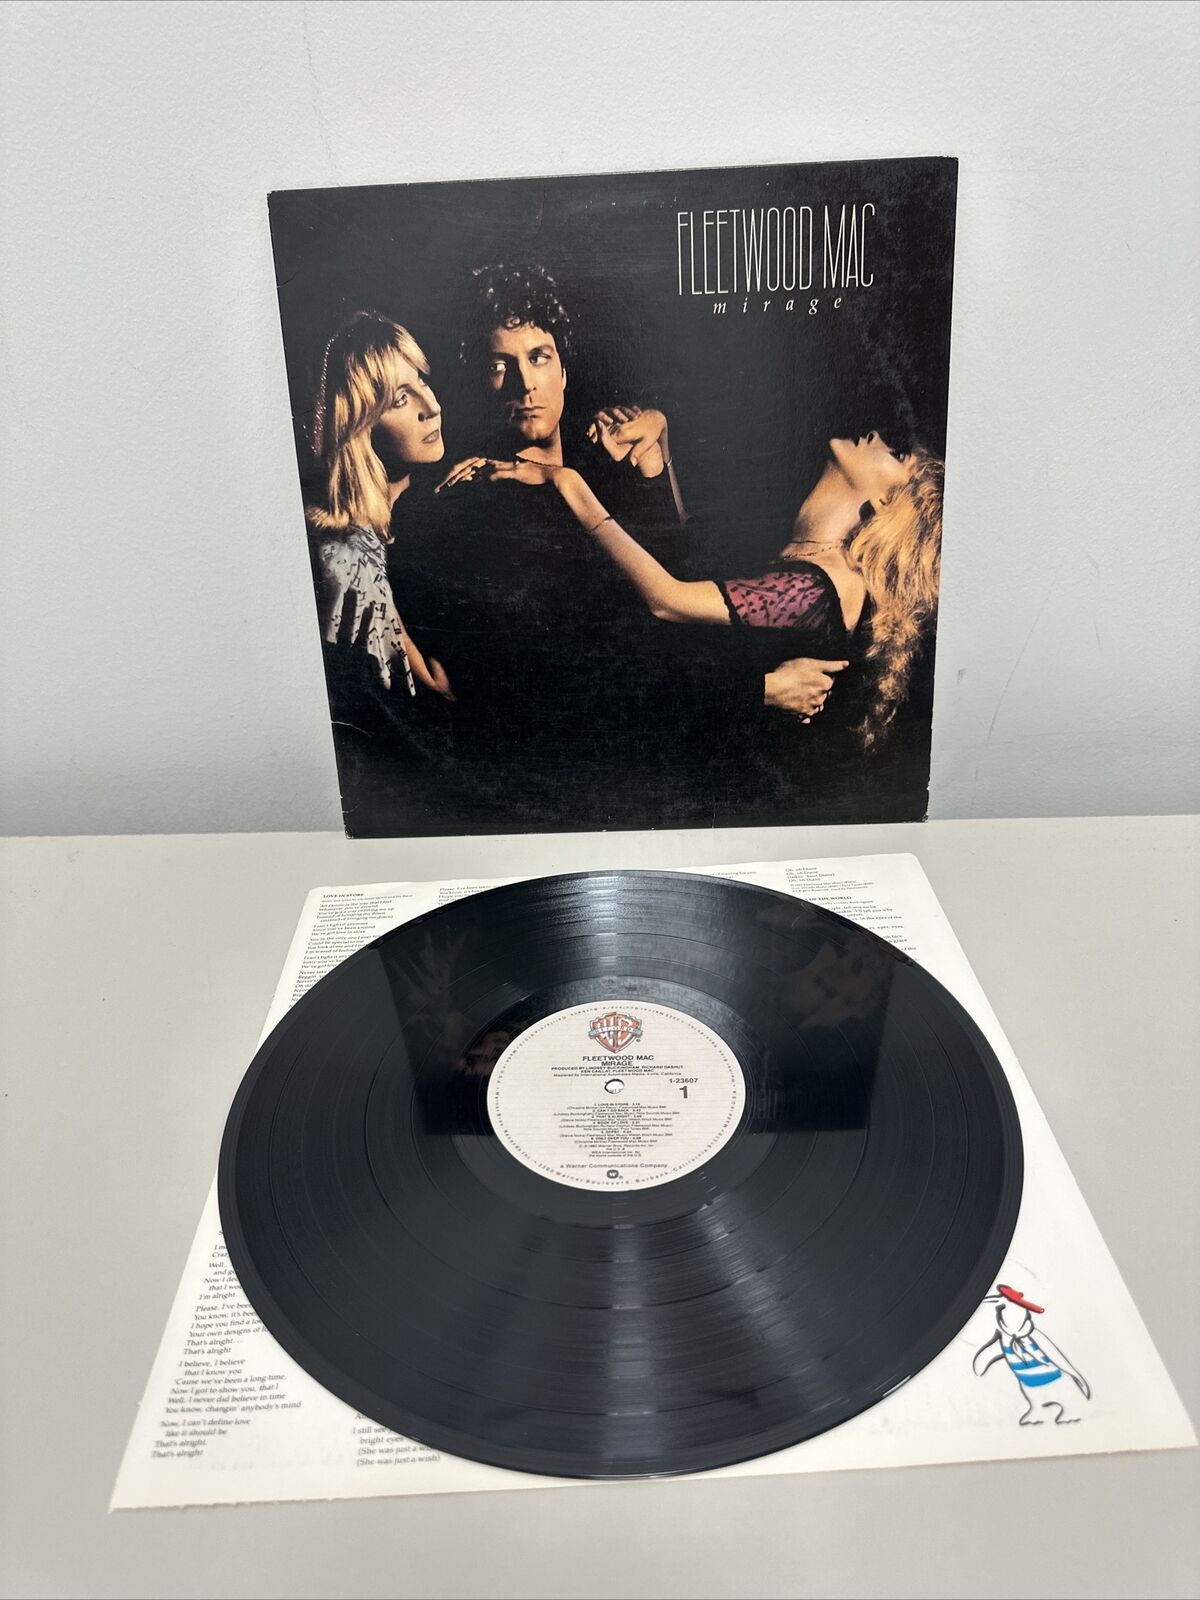 Mirage [LP] by Fleetwood Mac (Vinyl, Warner Bros. Records Record Label) VG+